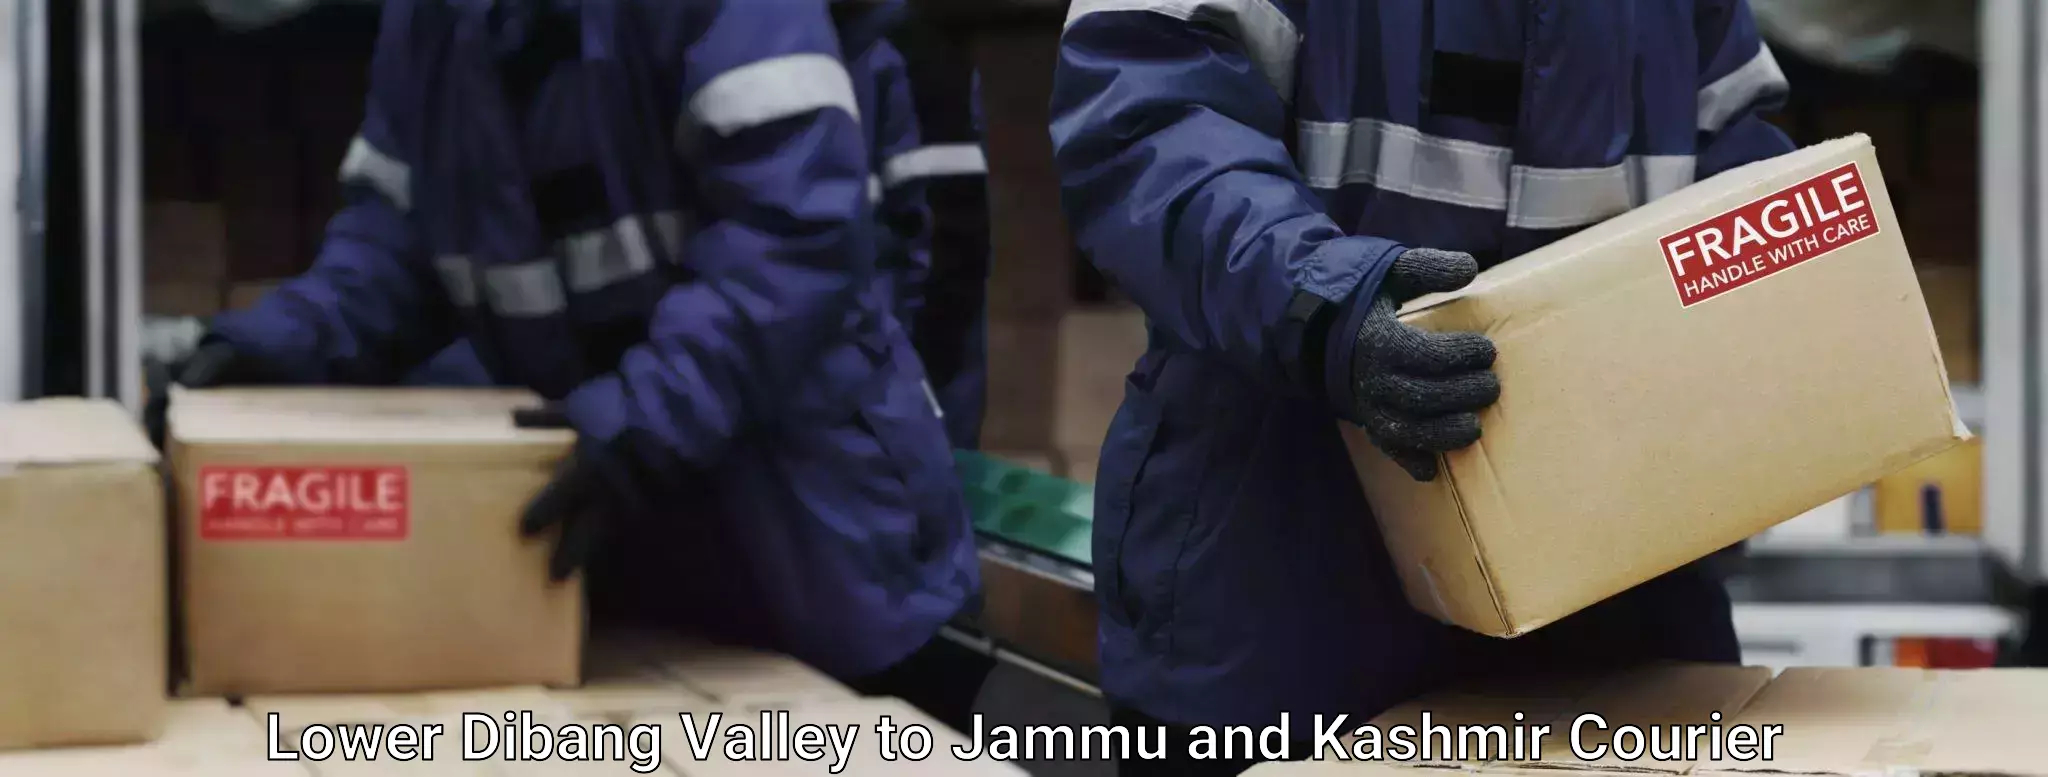 Doorstep luggage collection Lower Dibang Valley to Srinagar Kashmir